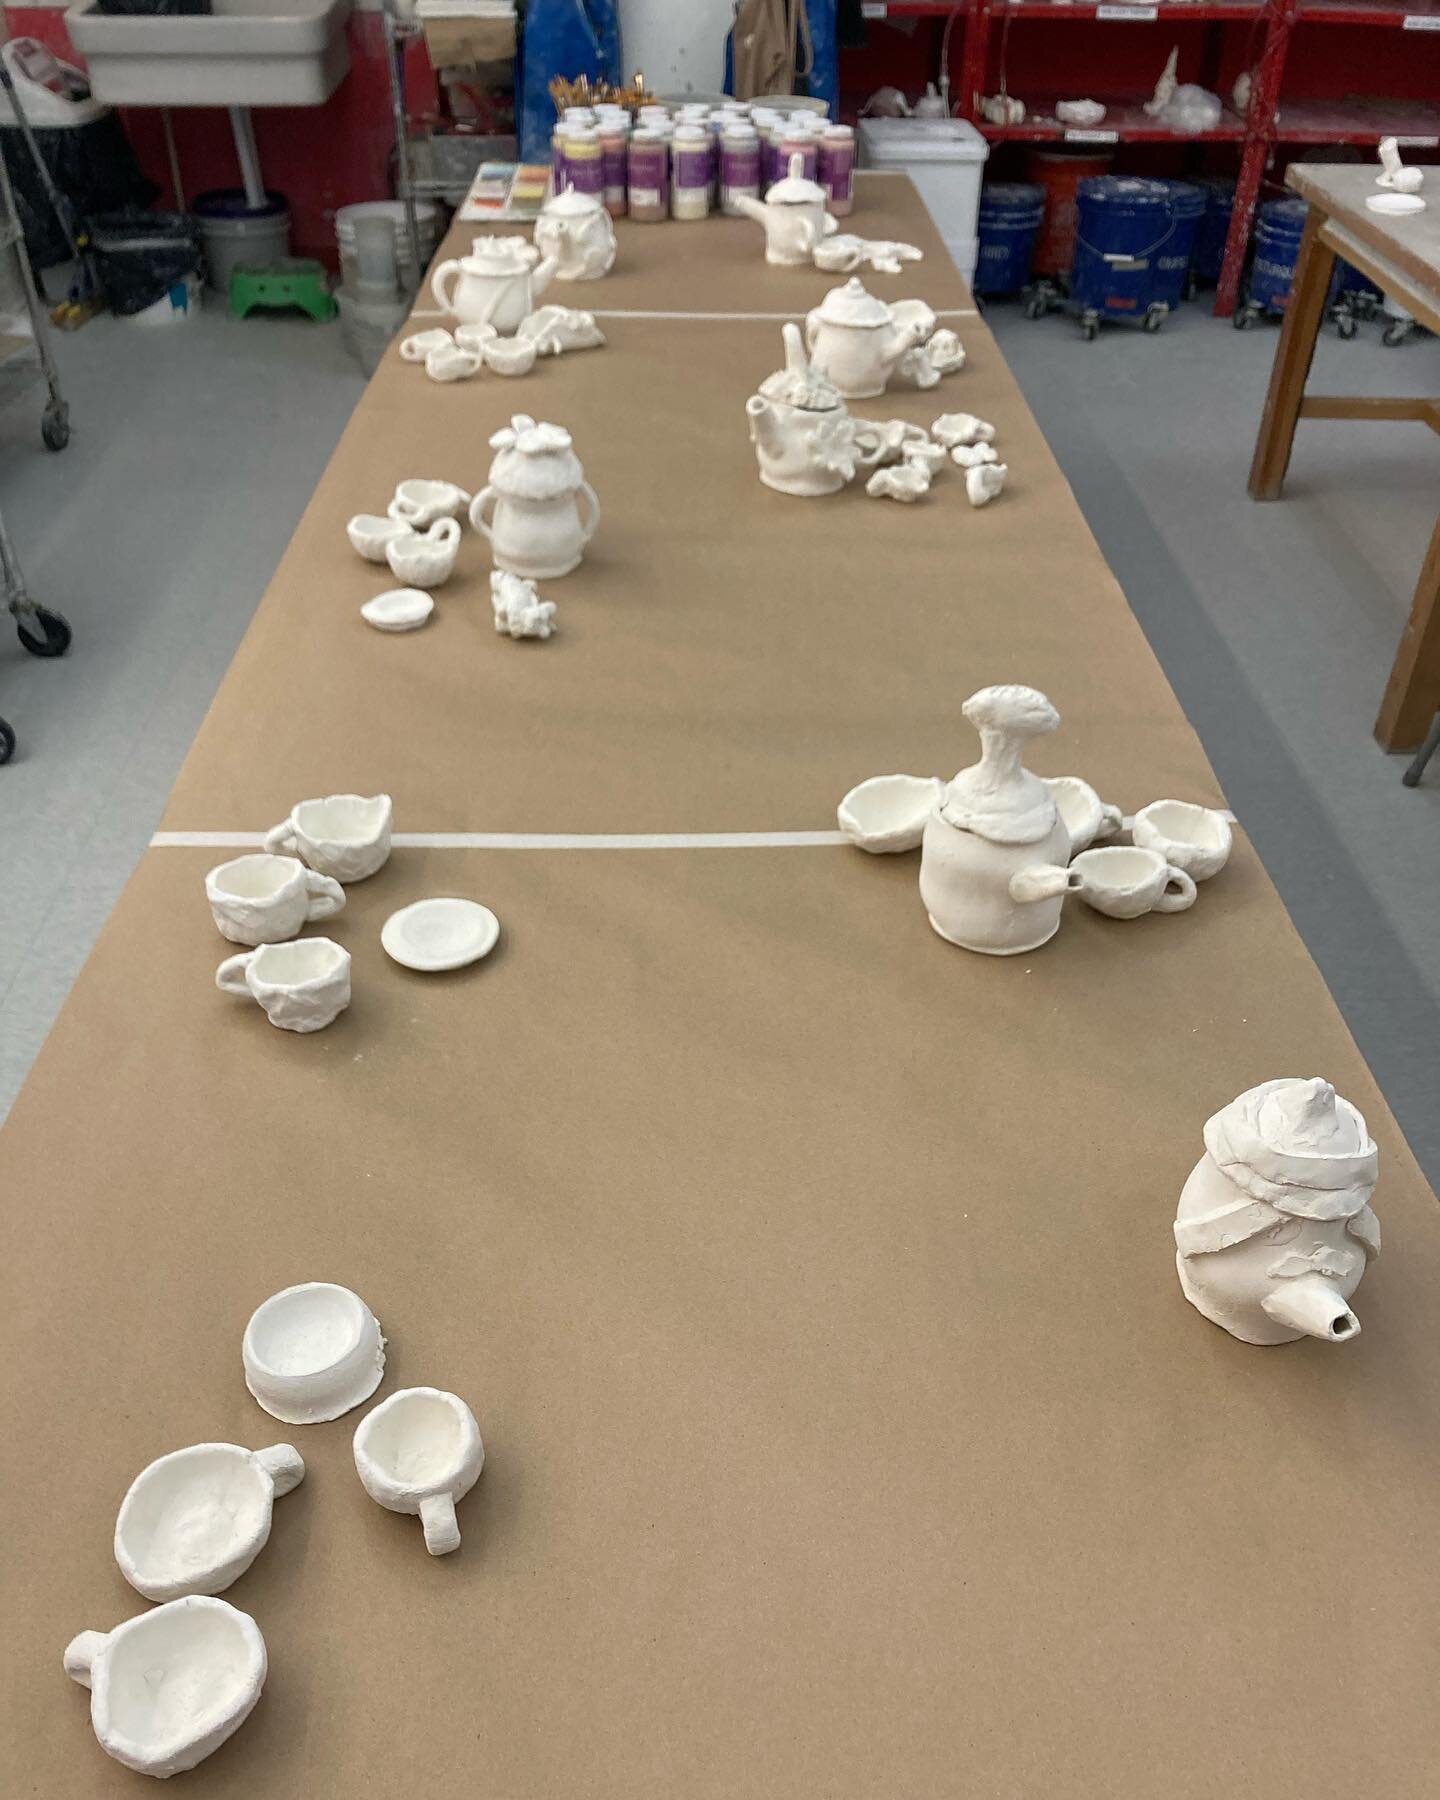 Before glazing..... after! After school hand building project and pottery led by @bohemitu ta @jordanygenao 
❤️🫖❤️🫖❤️🫖❤️
#tribecaclayworks #manhattanyouth #clay #ceramics #tribeca #sculpture #ceramicart #ceramiclove #ceramicartistsofinstagram #scu